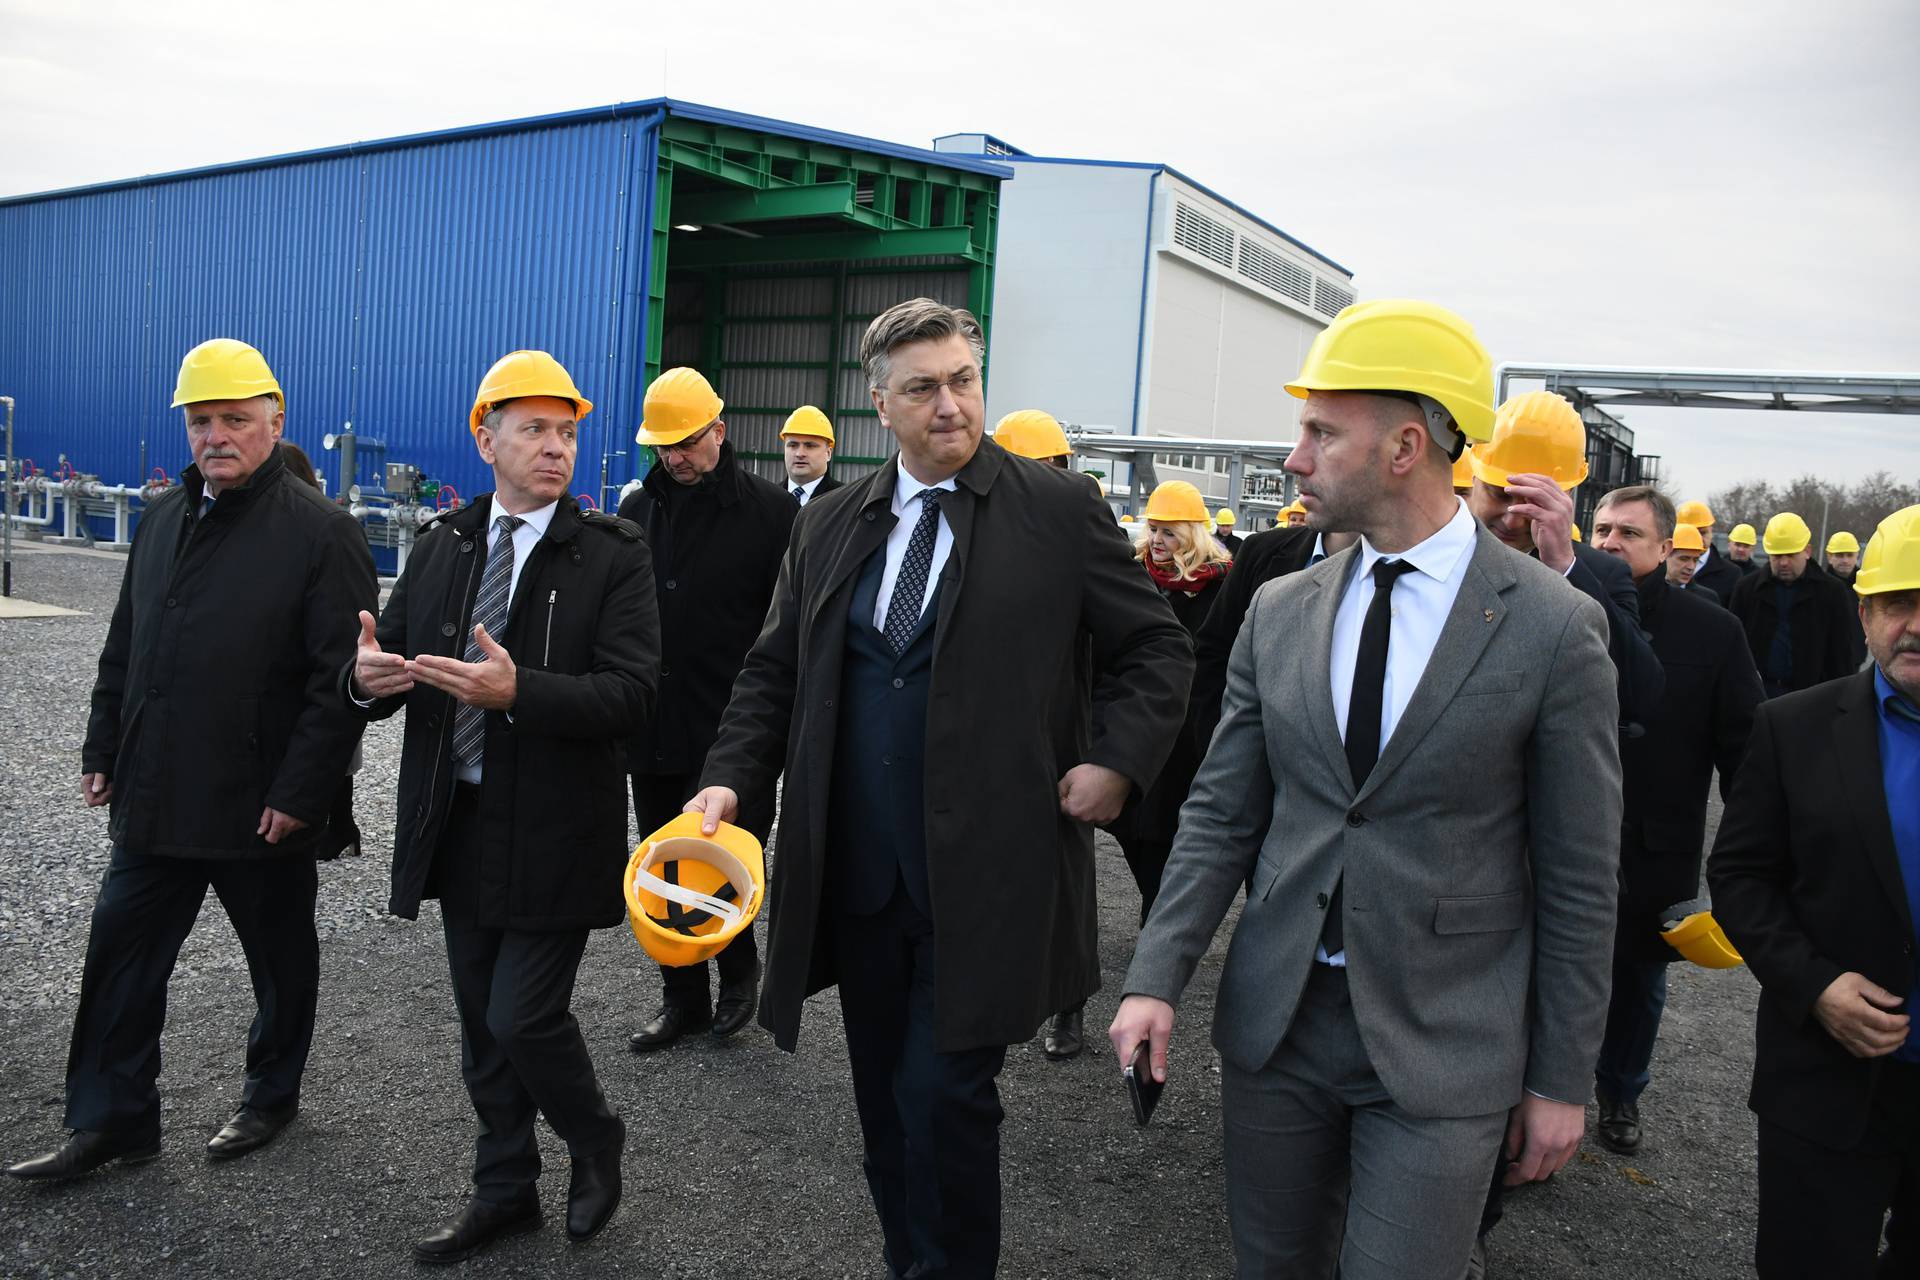 Grubišno Polje: Svečano obilježavanje završetka prve faze projekta izgradnje Podzemnog skladišta plina